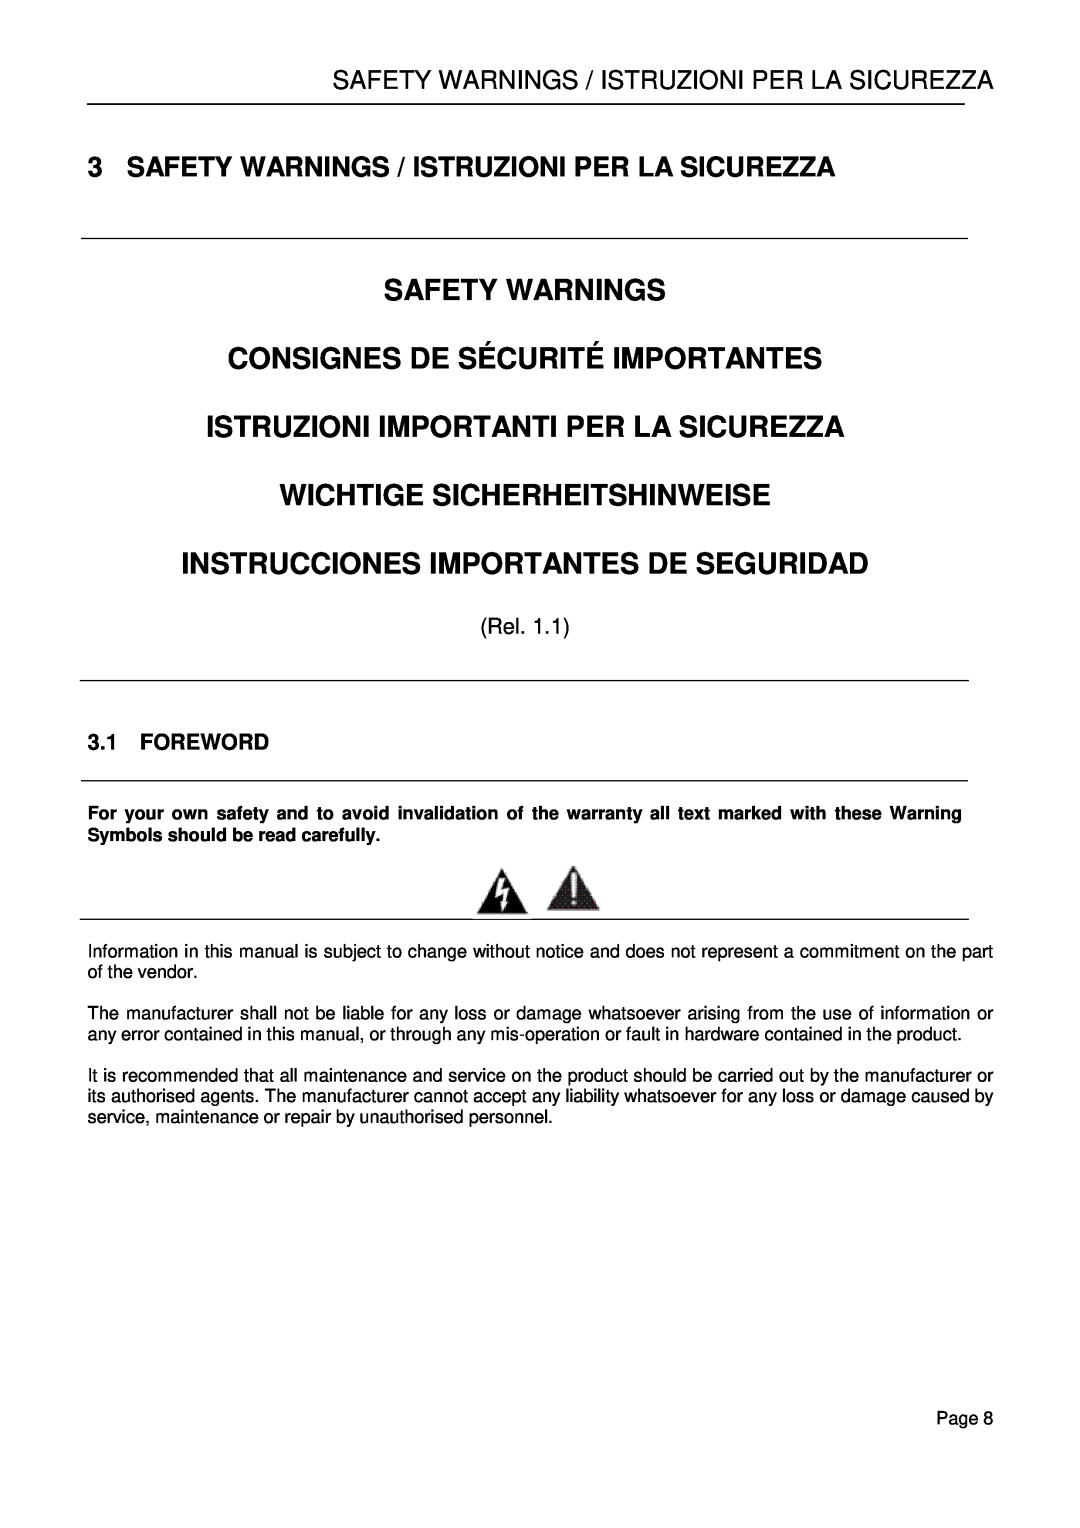 Falcon 15 manual Safety Warnings / Istruzioni Per La Sicurezza, Safety Warnings Consignes De Sécurité Importantes, Rel 